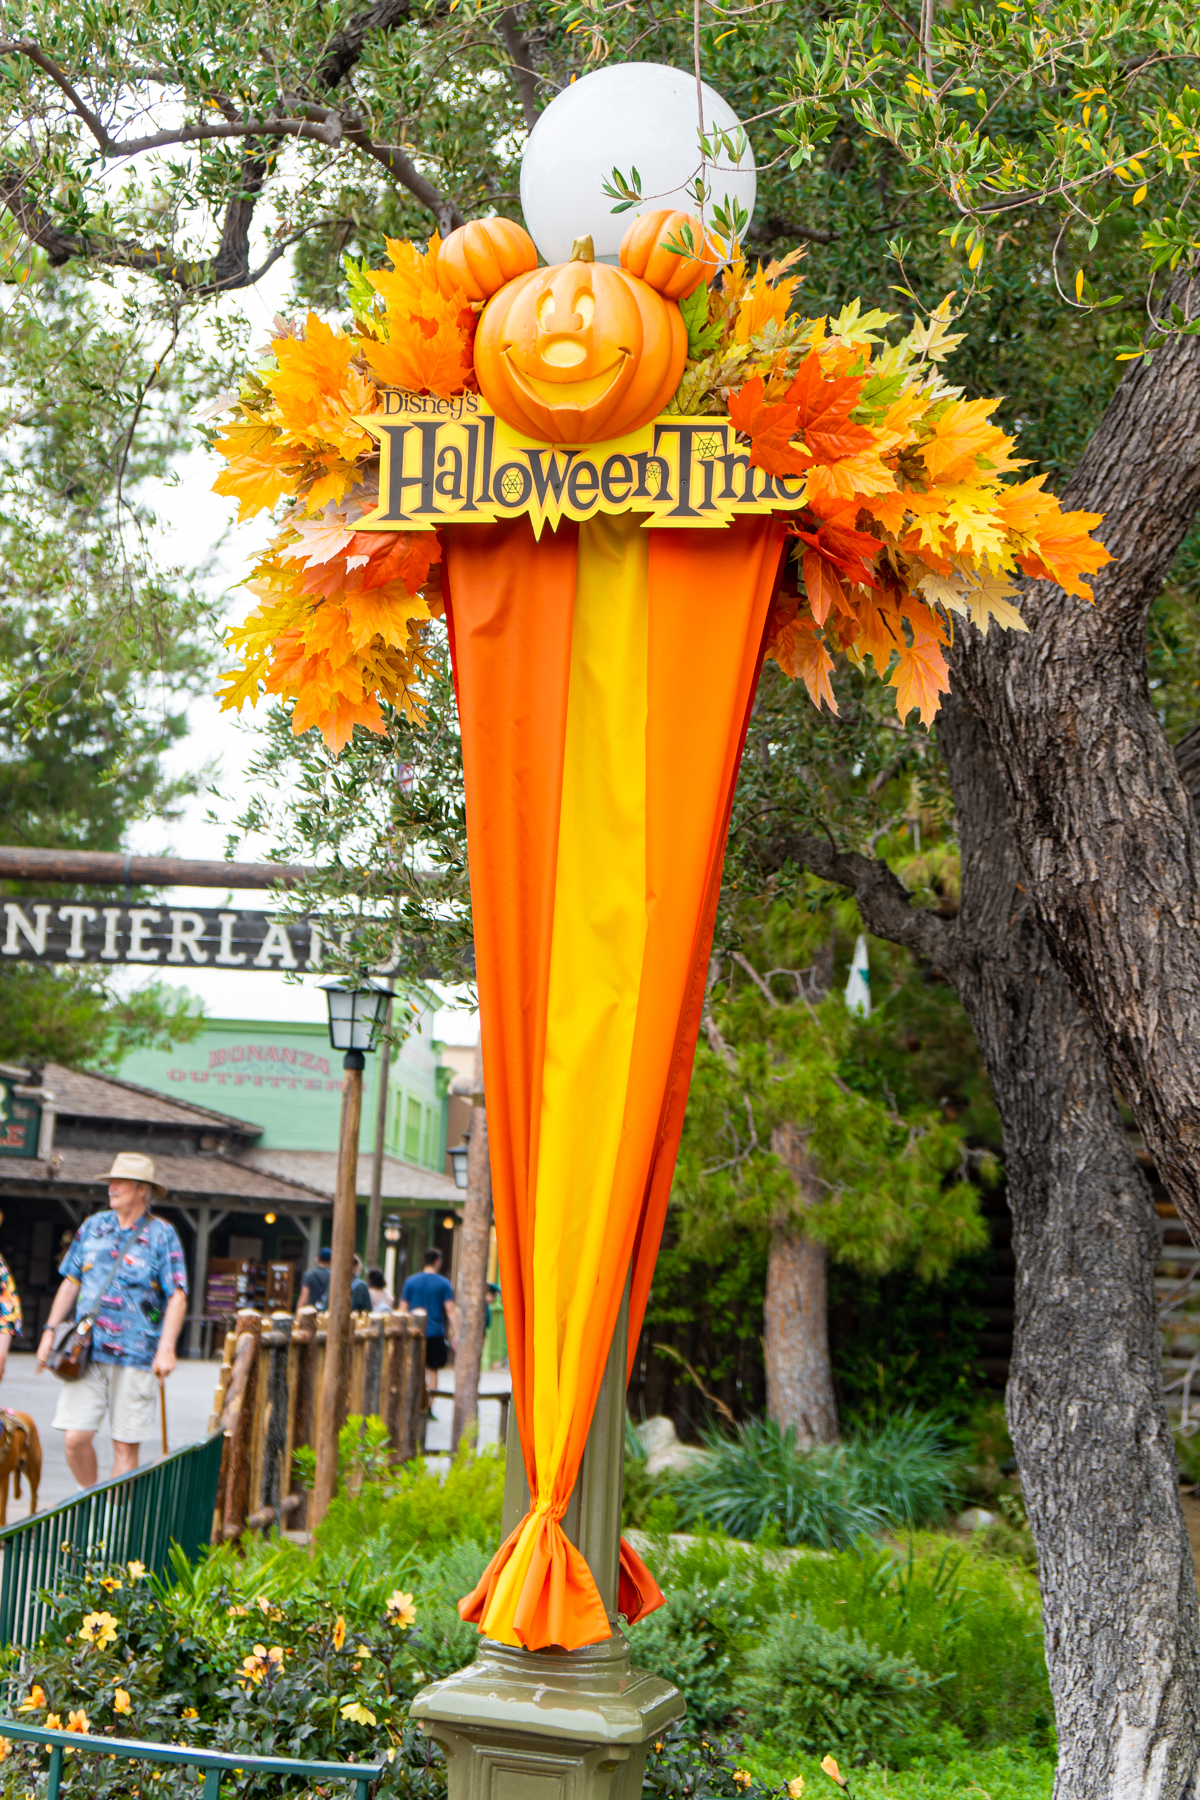 Disneyland Halloween Time decorations